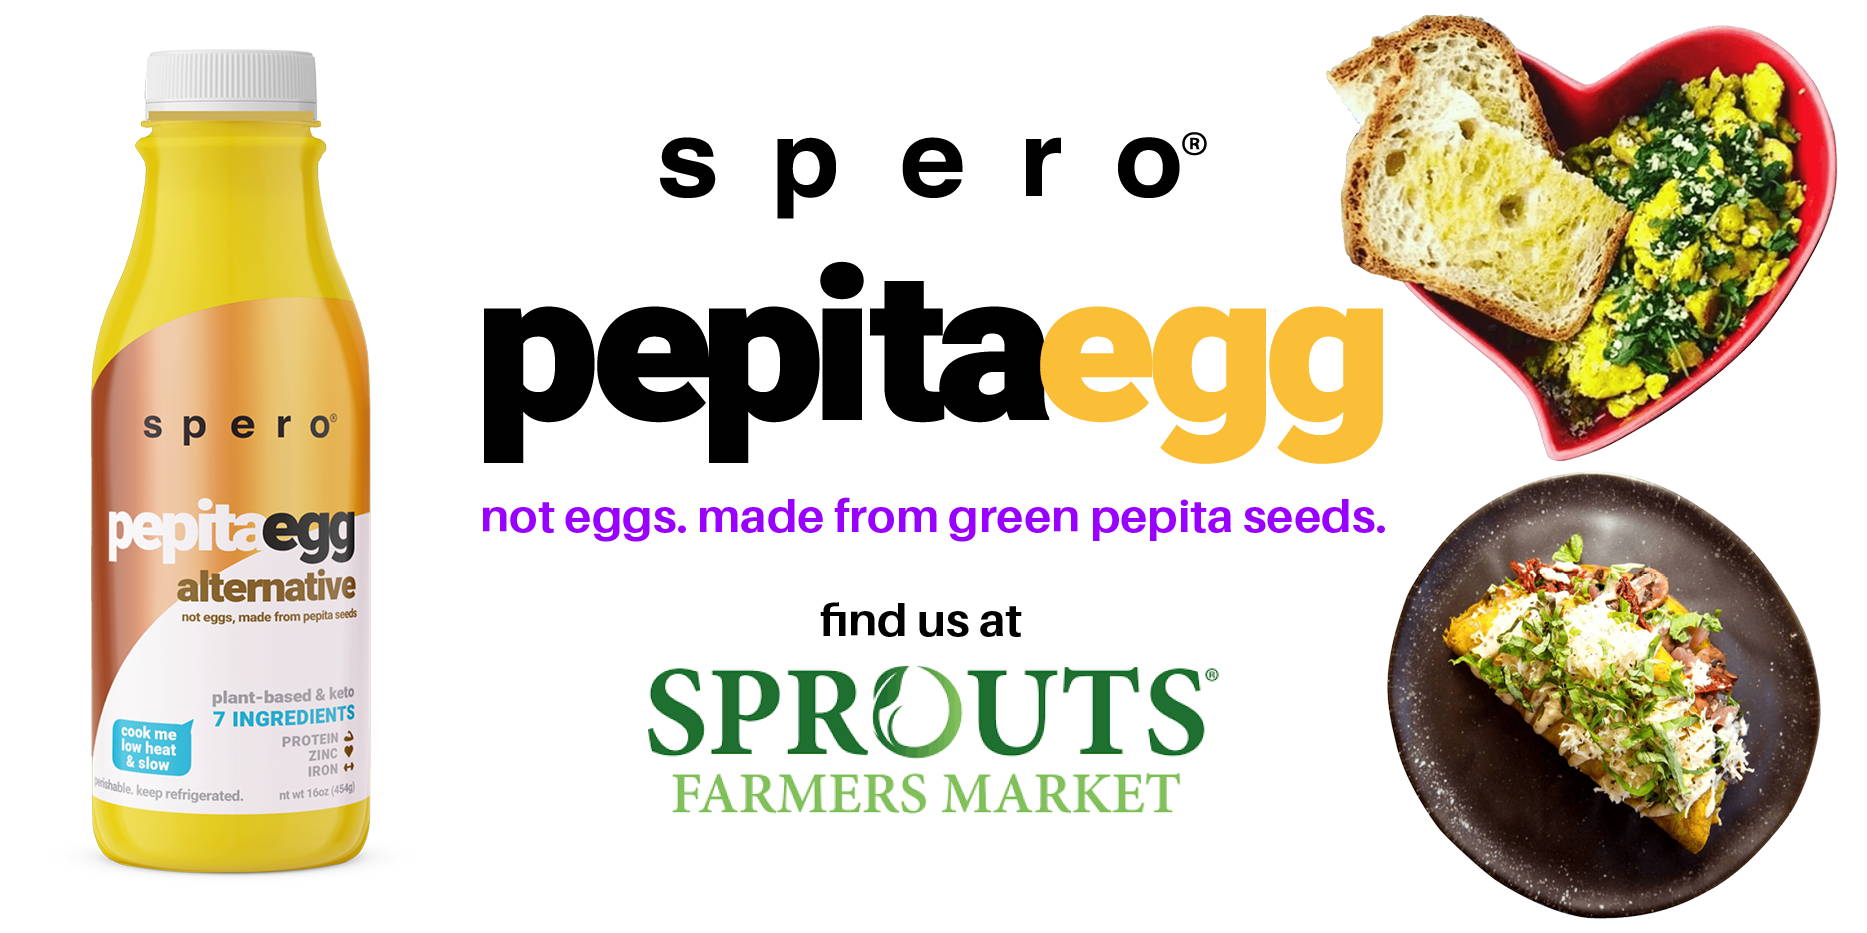 spero pepita egg not eggs made from green pepita seeds